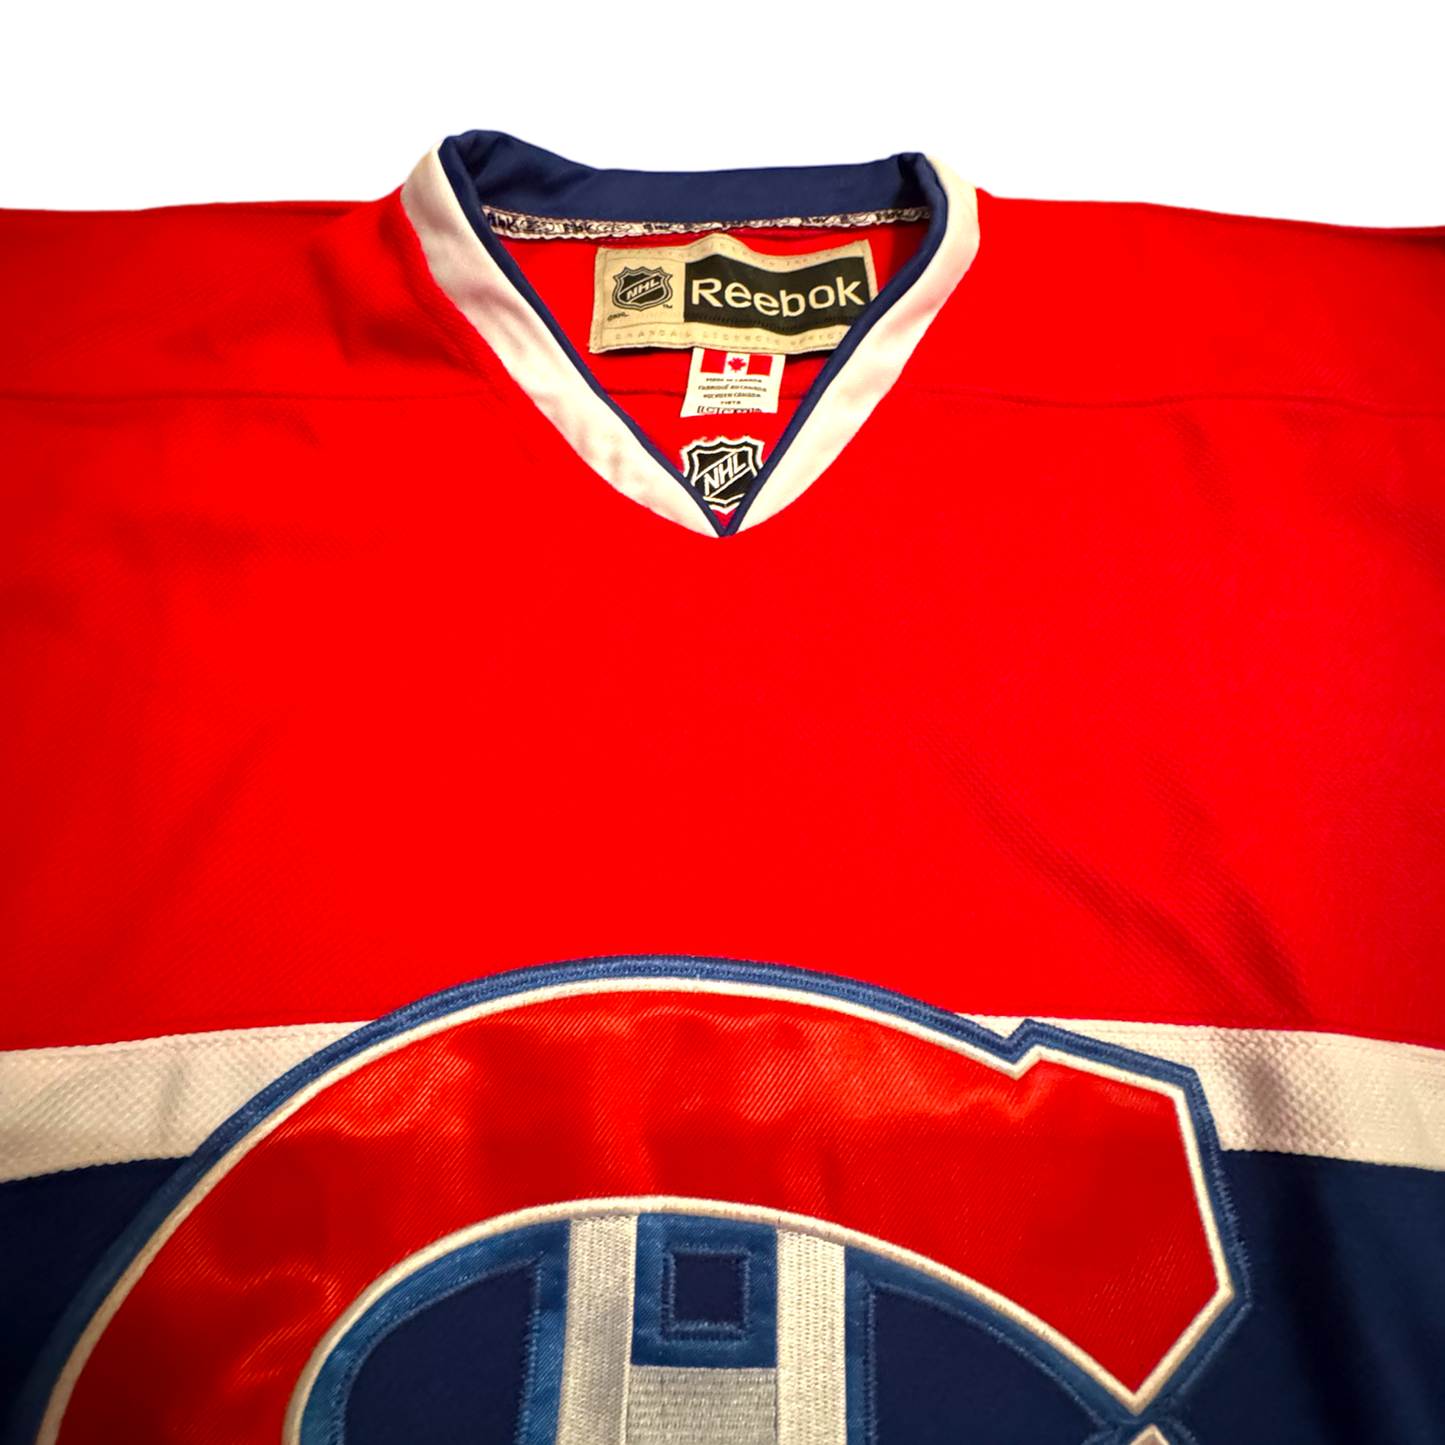 Reebok x CCM - Montreal Canadiens Price Hockey Jersey